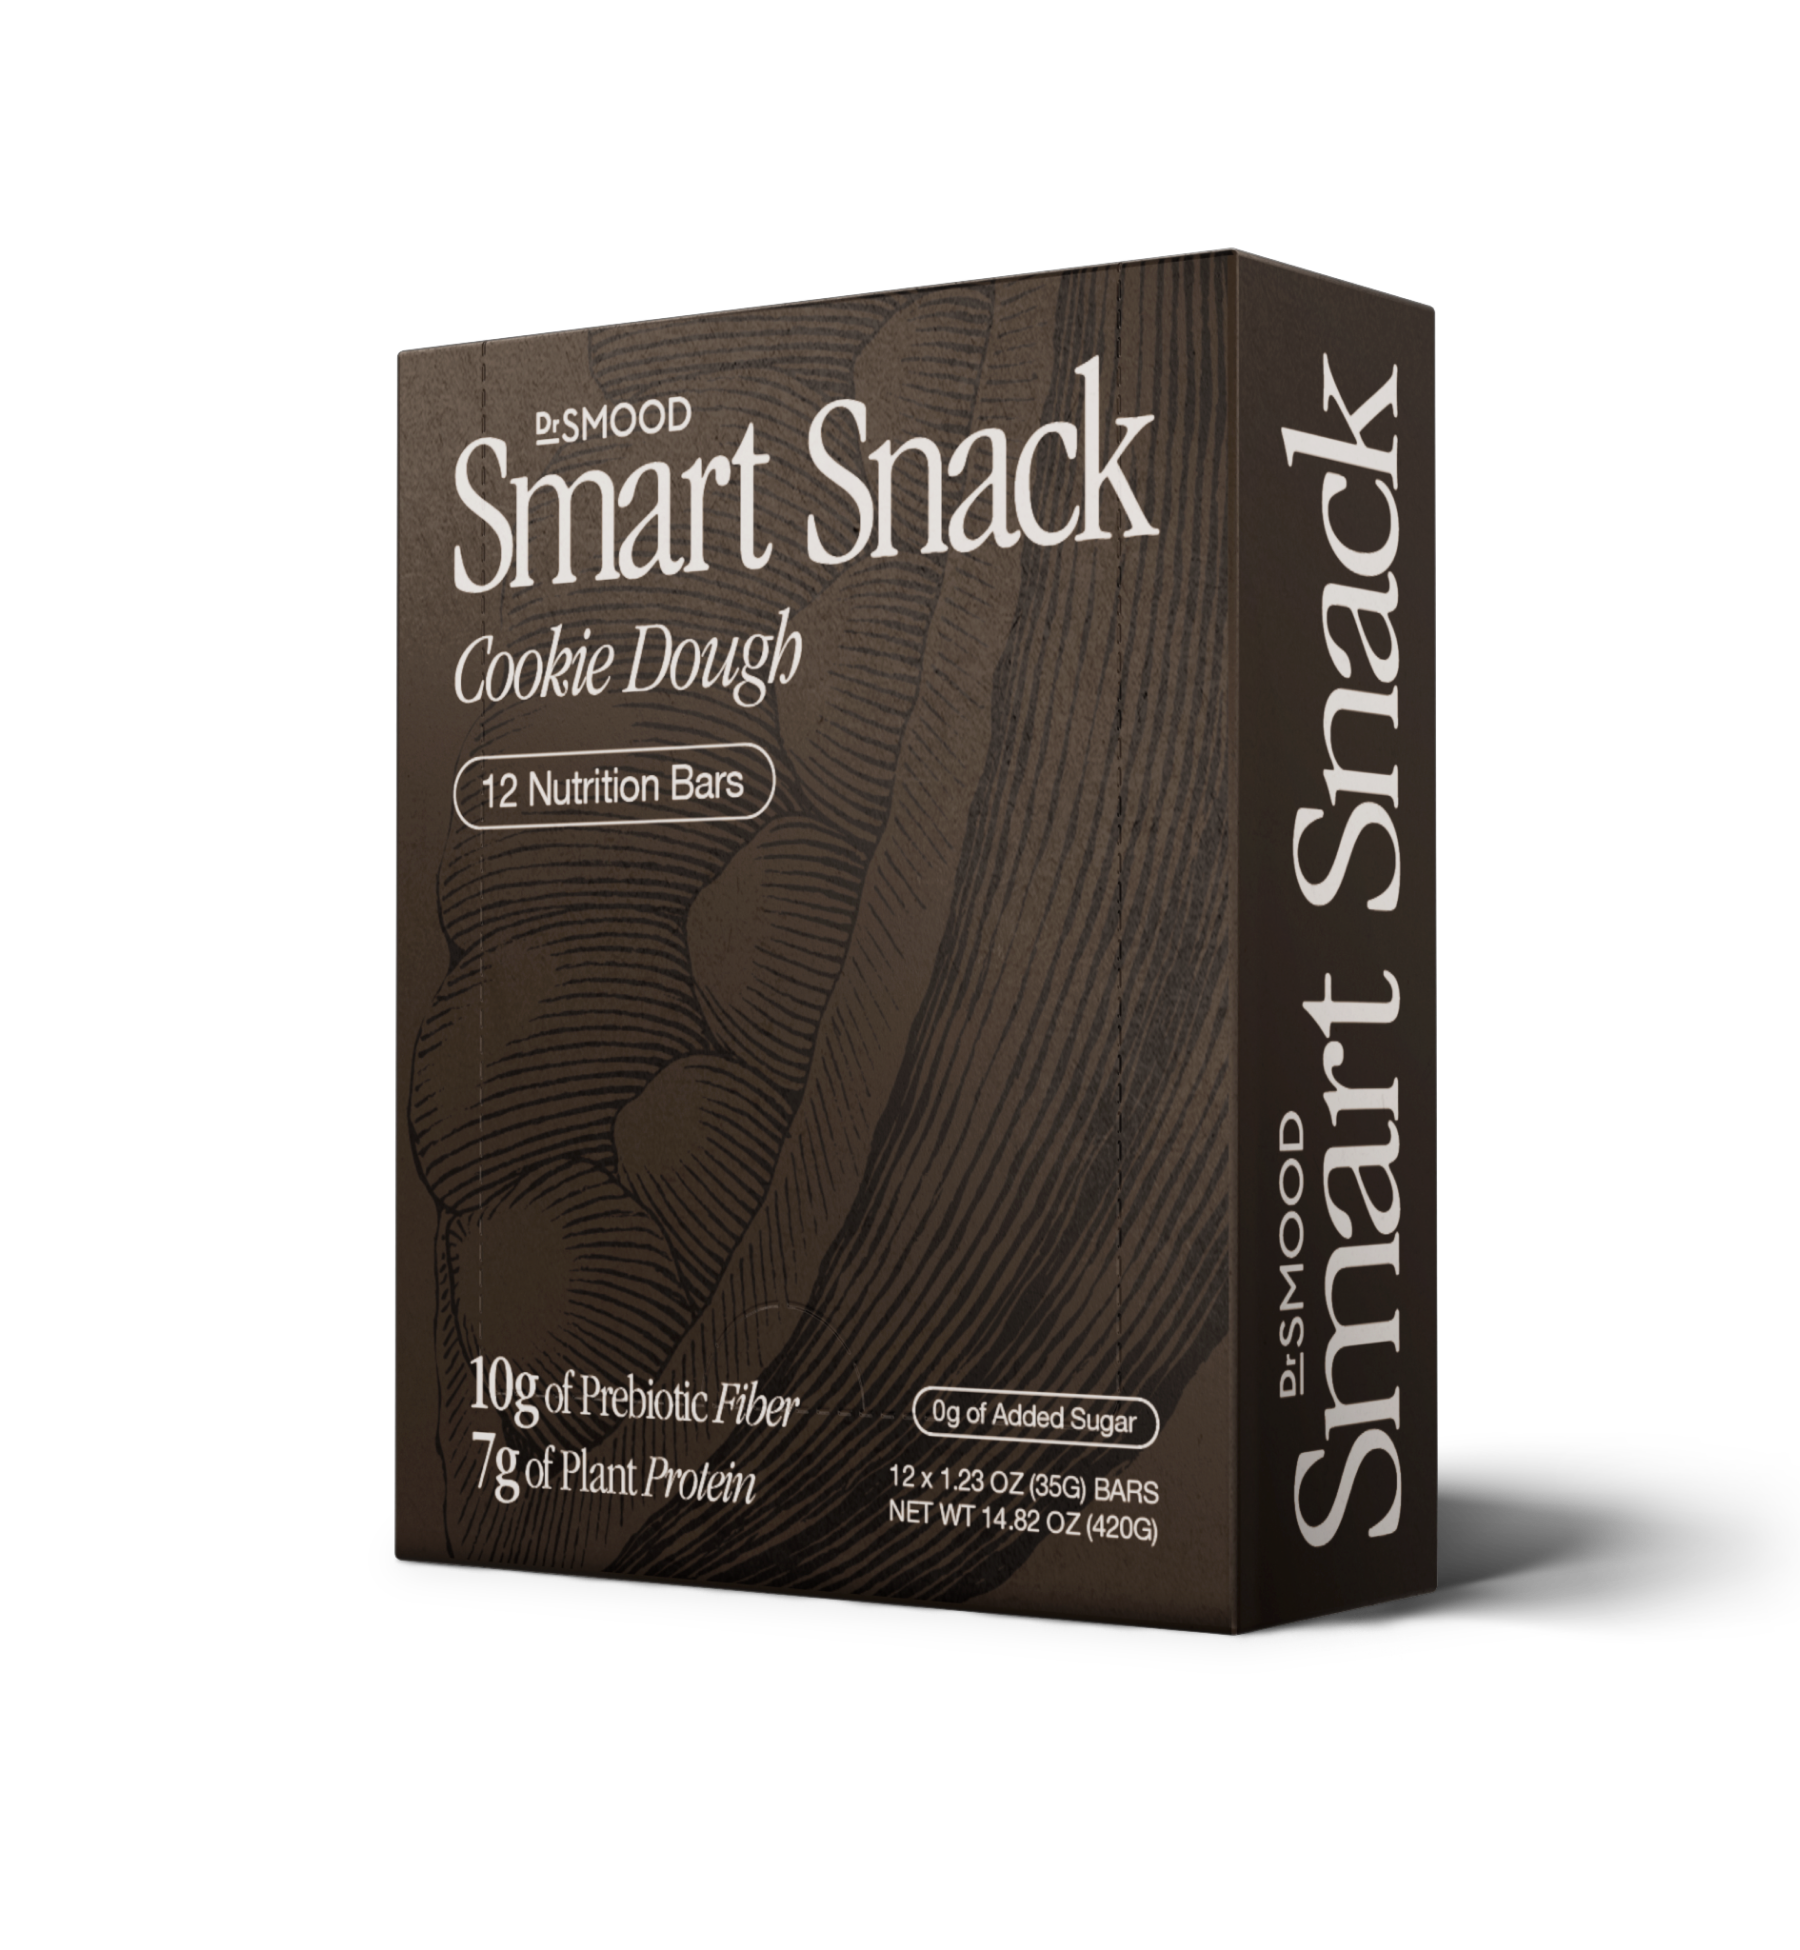 Smart Snack Cookie Dough - CookieDough_SS_PDP_2